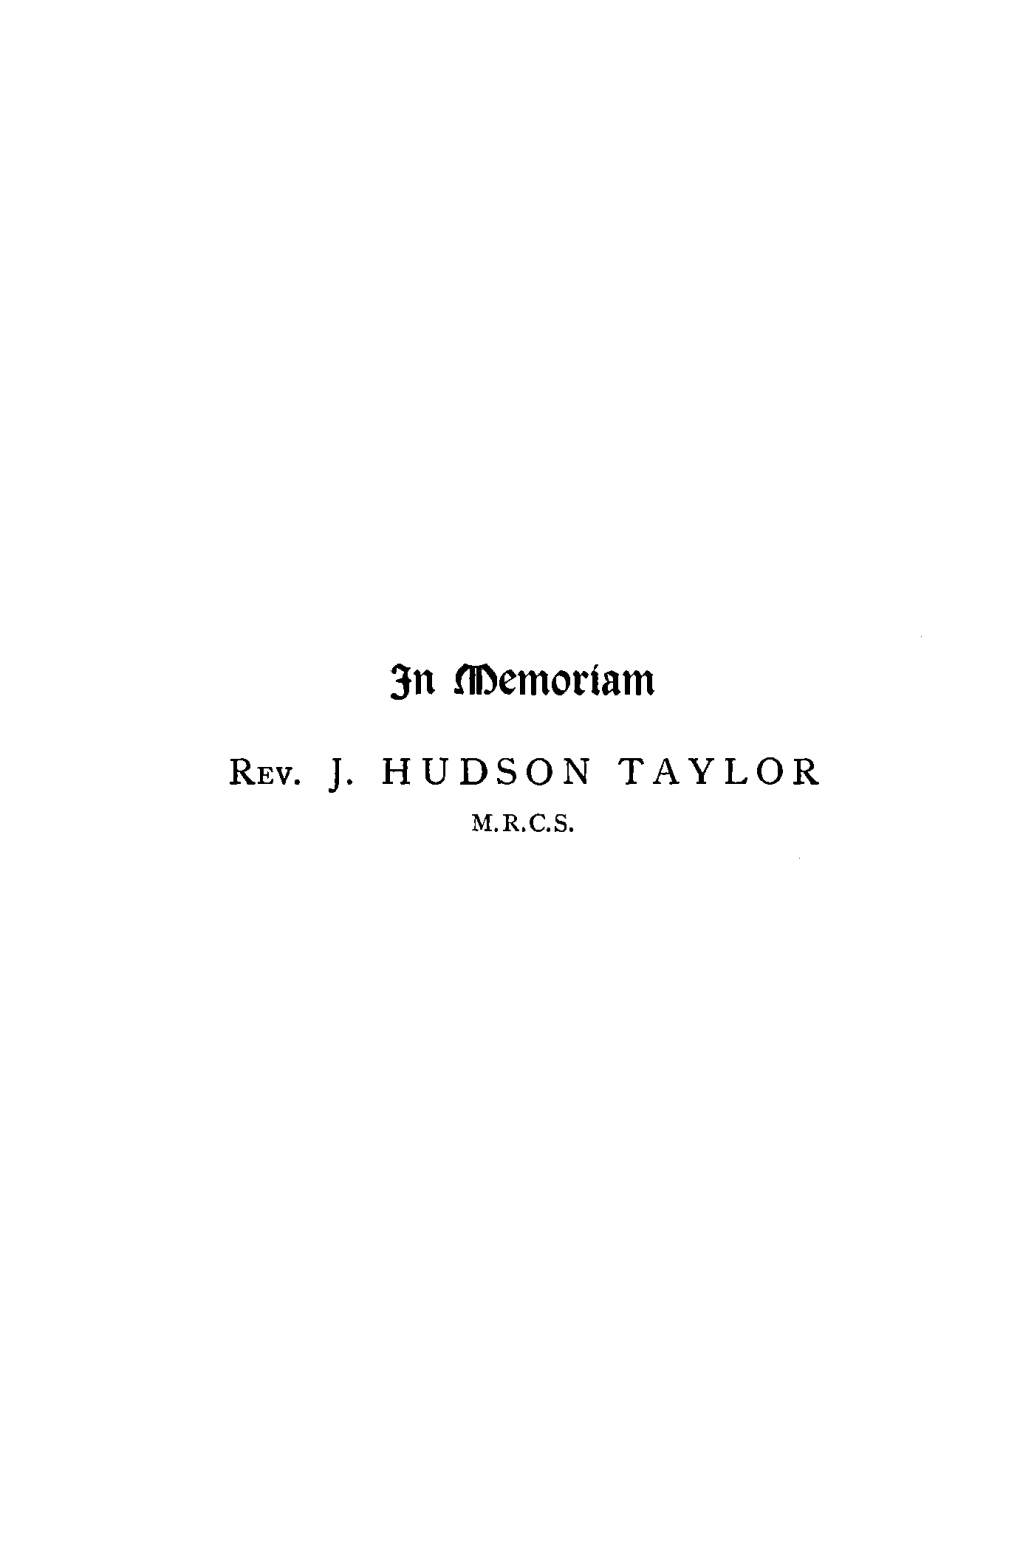 Ln Memoriam Rev. J. HUDSON TAYLOR